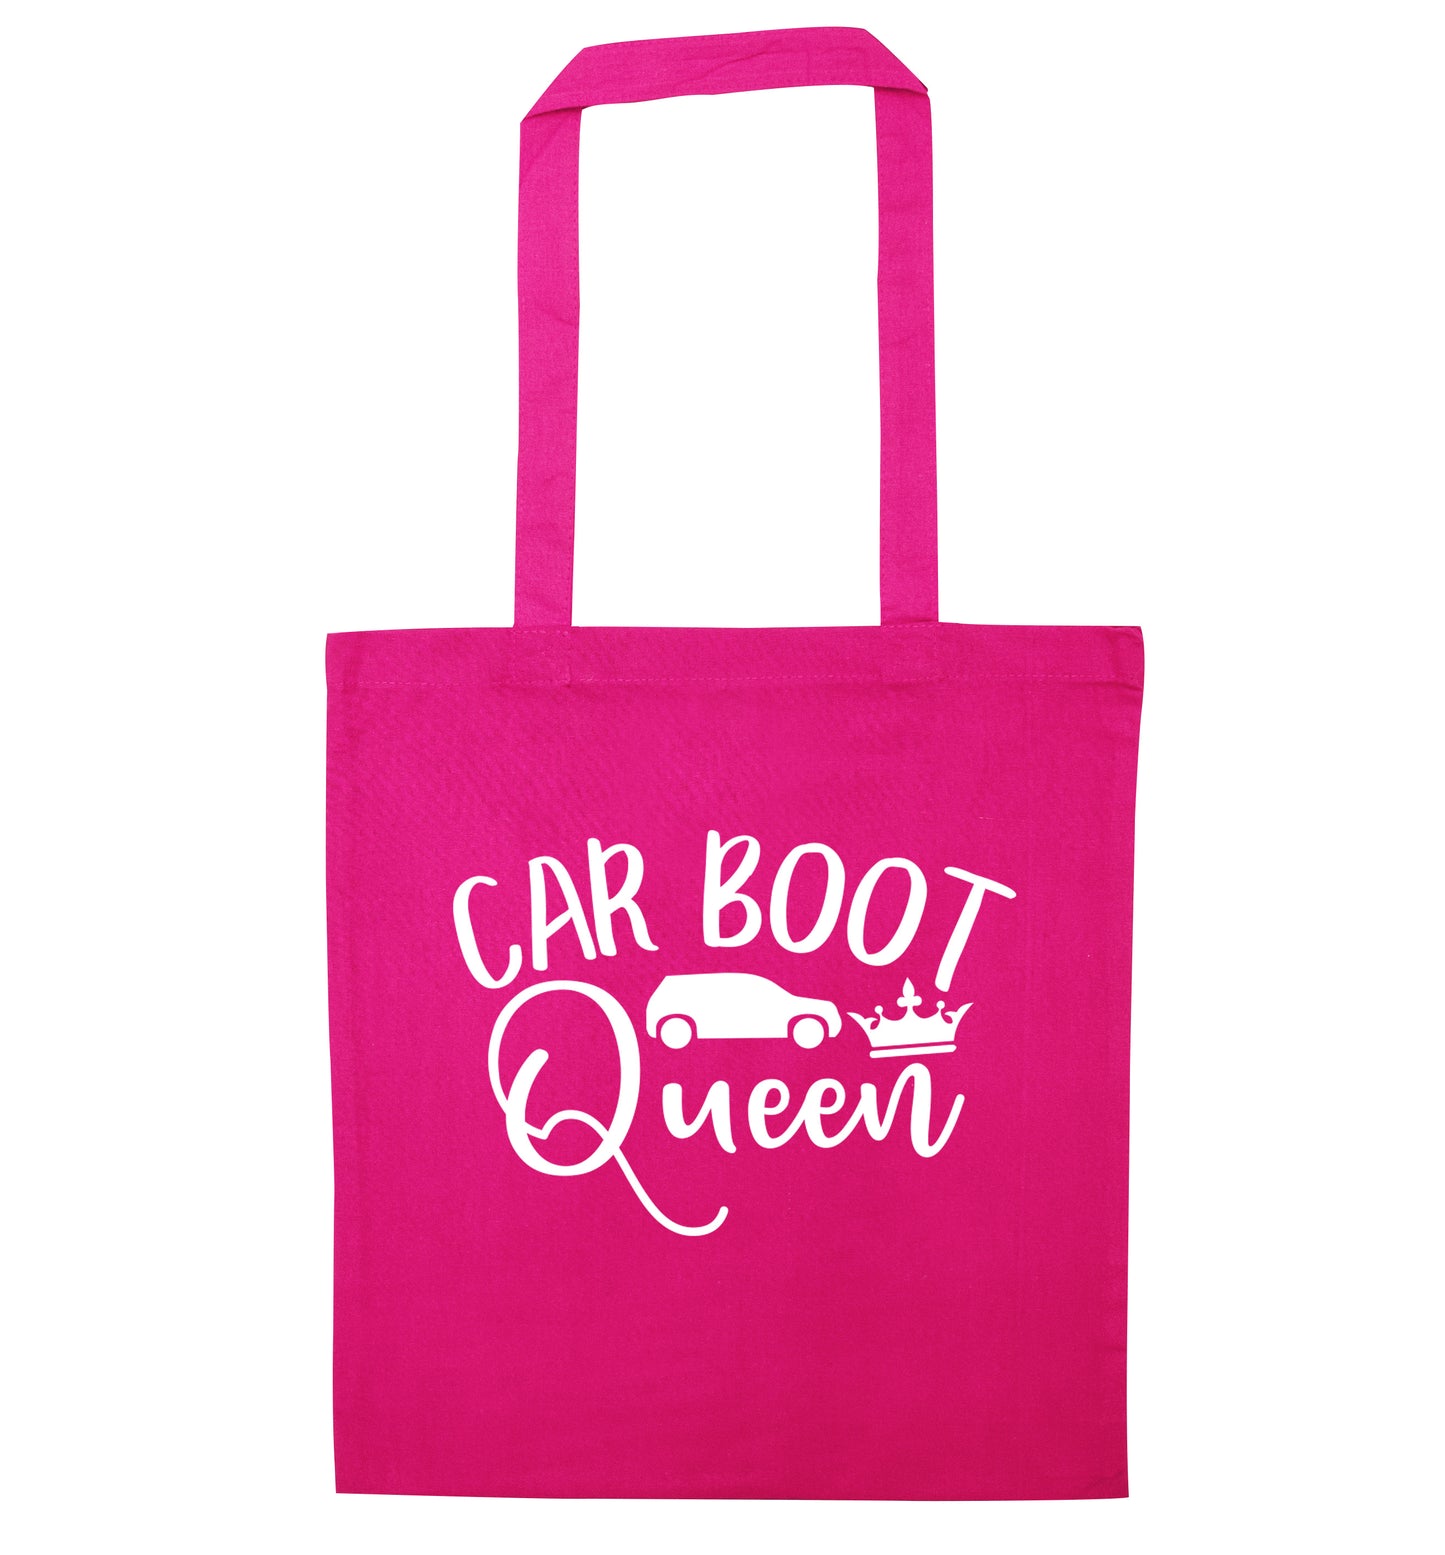 Carboot Queen pink tote bag